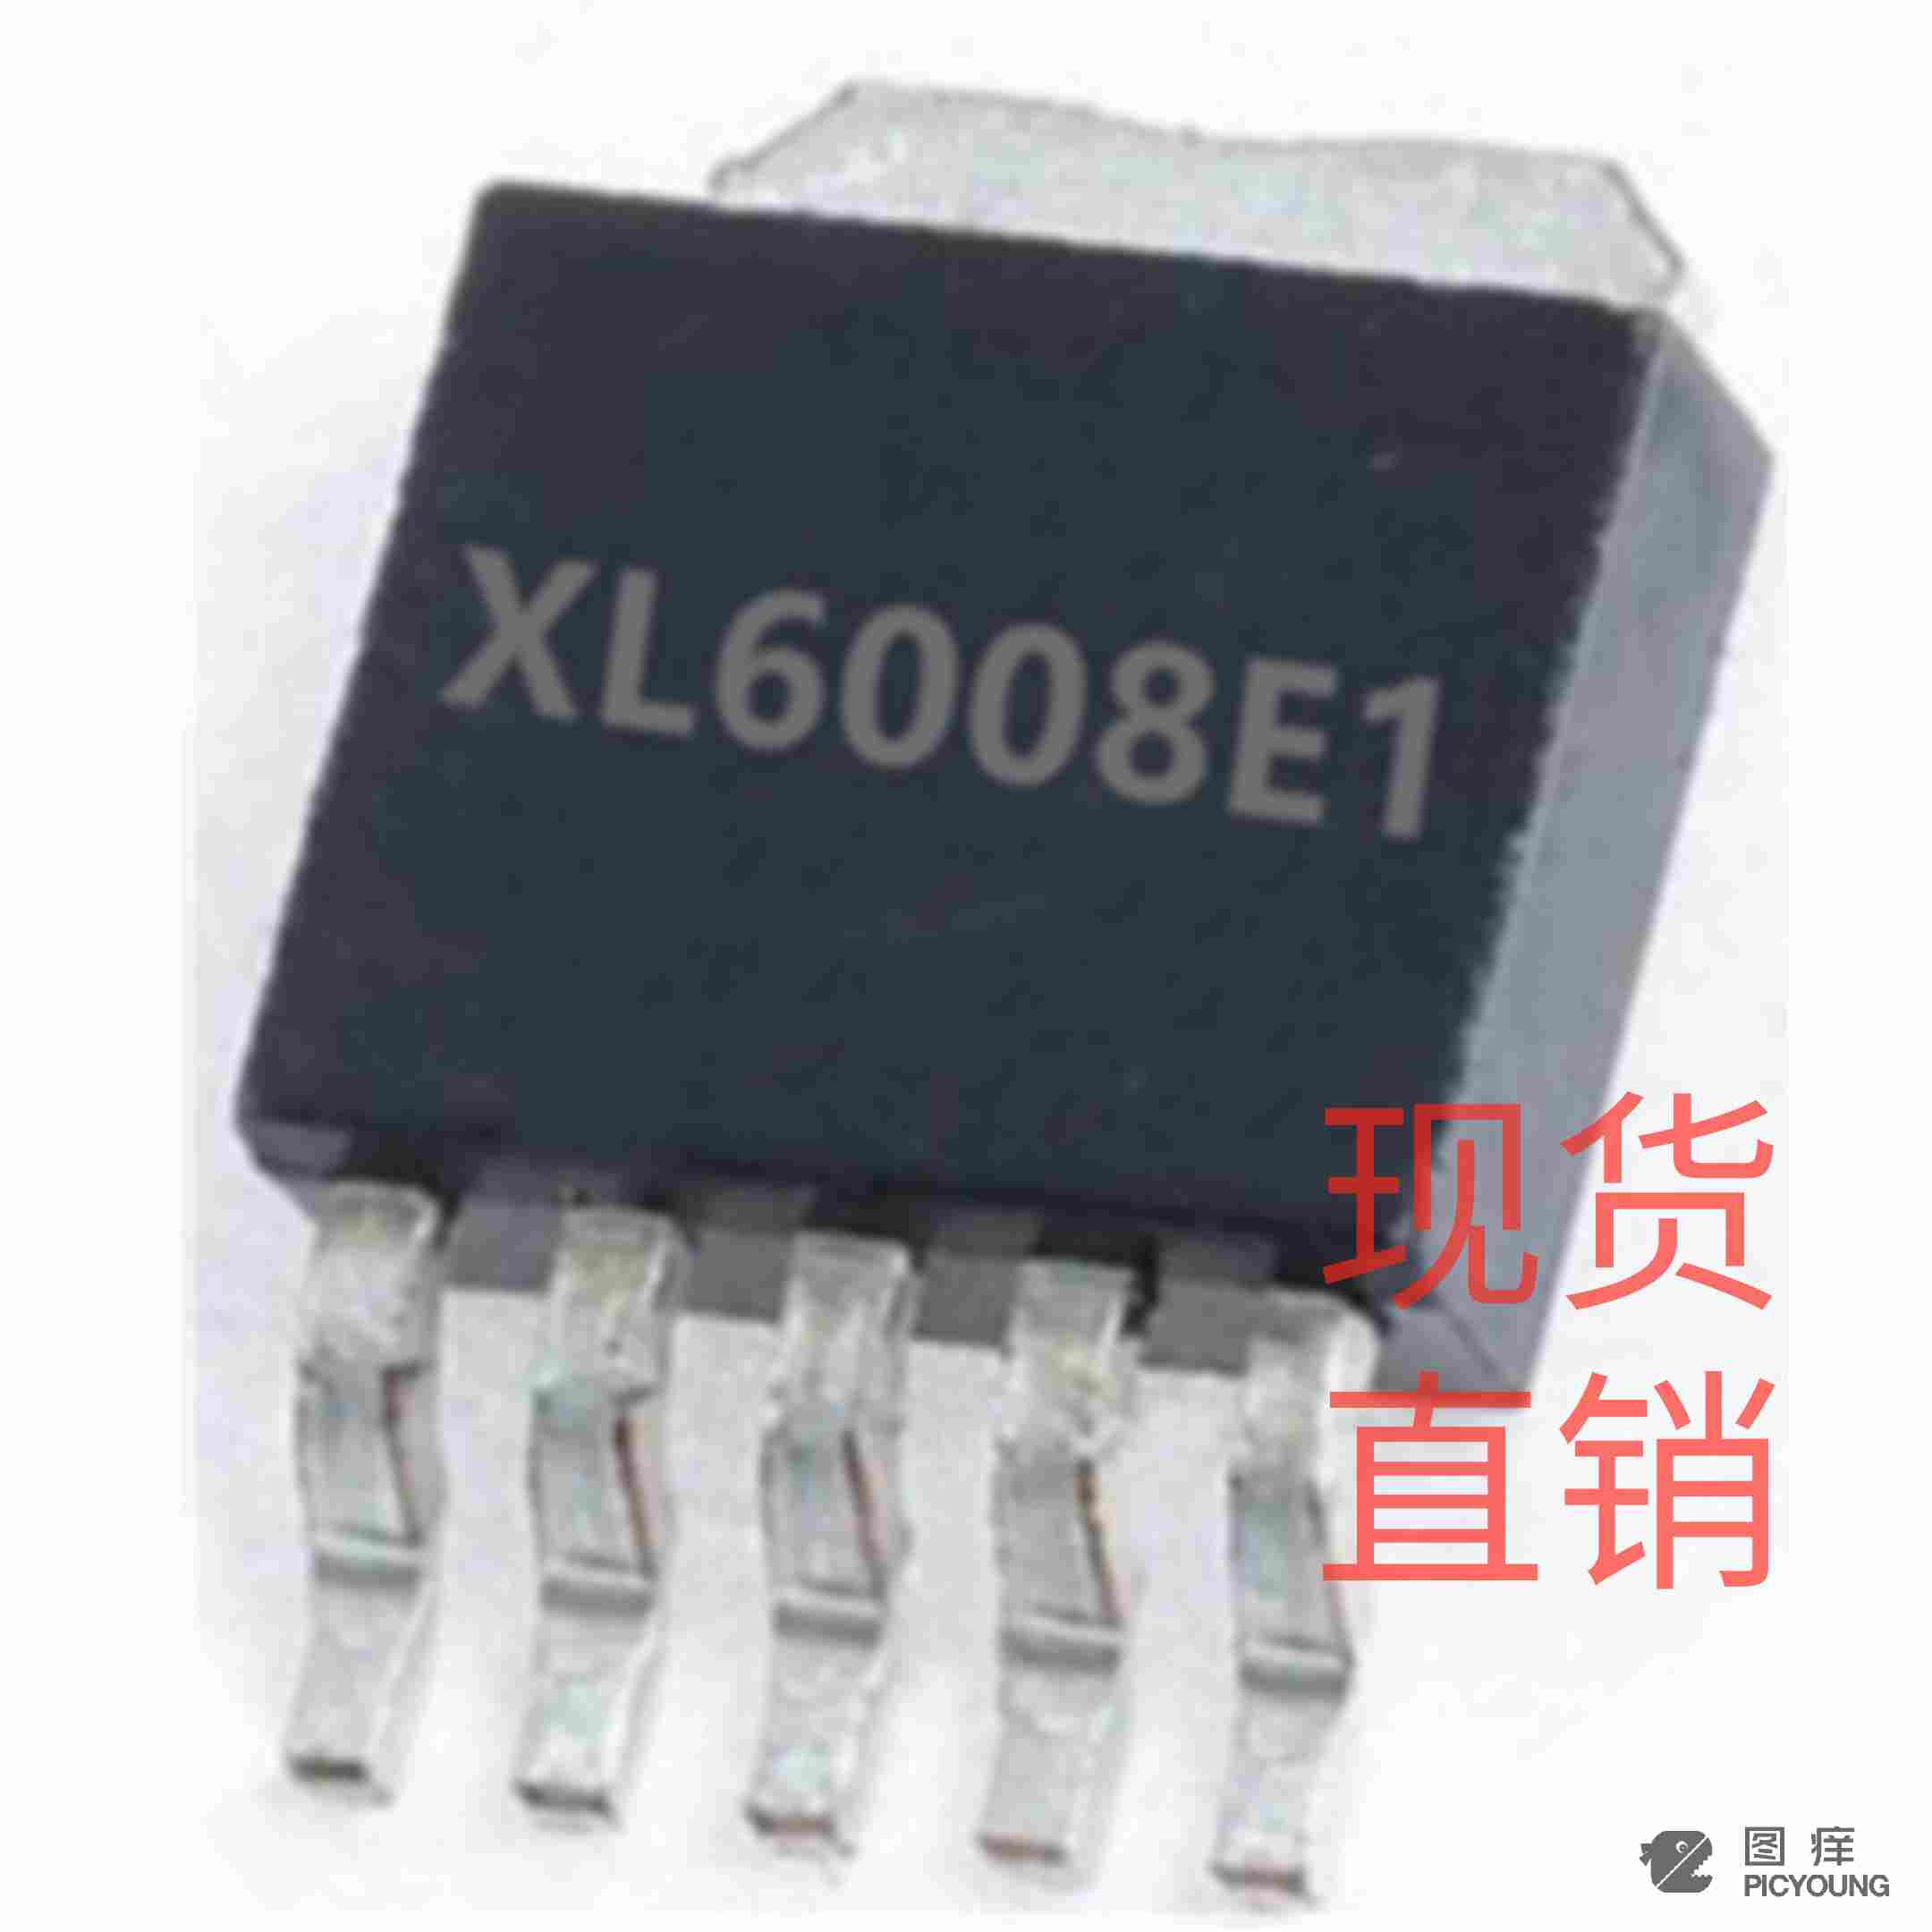 XL6008升压型直流电源变换器芯片 XL6008升压型电源变换器芯片